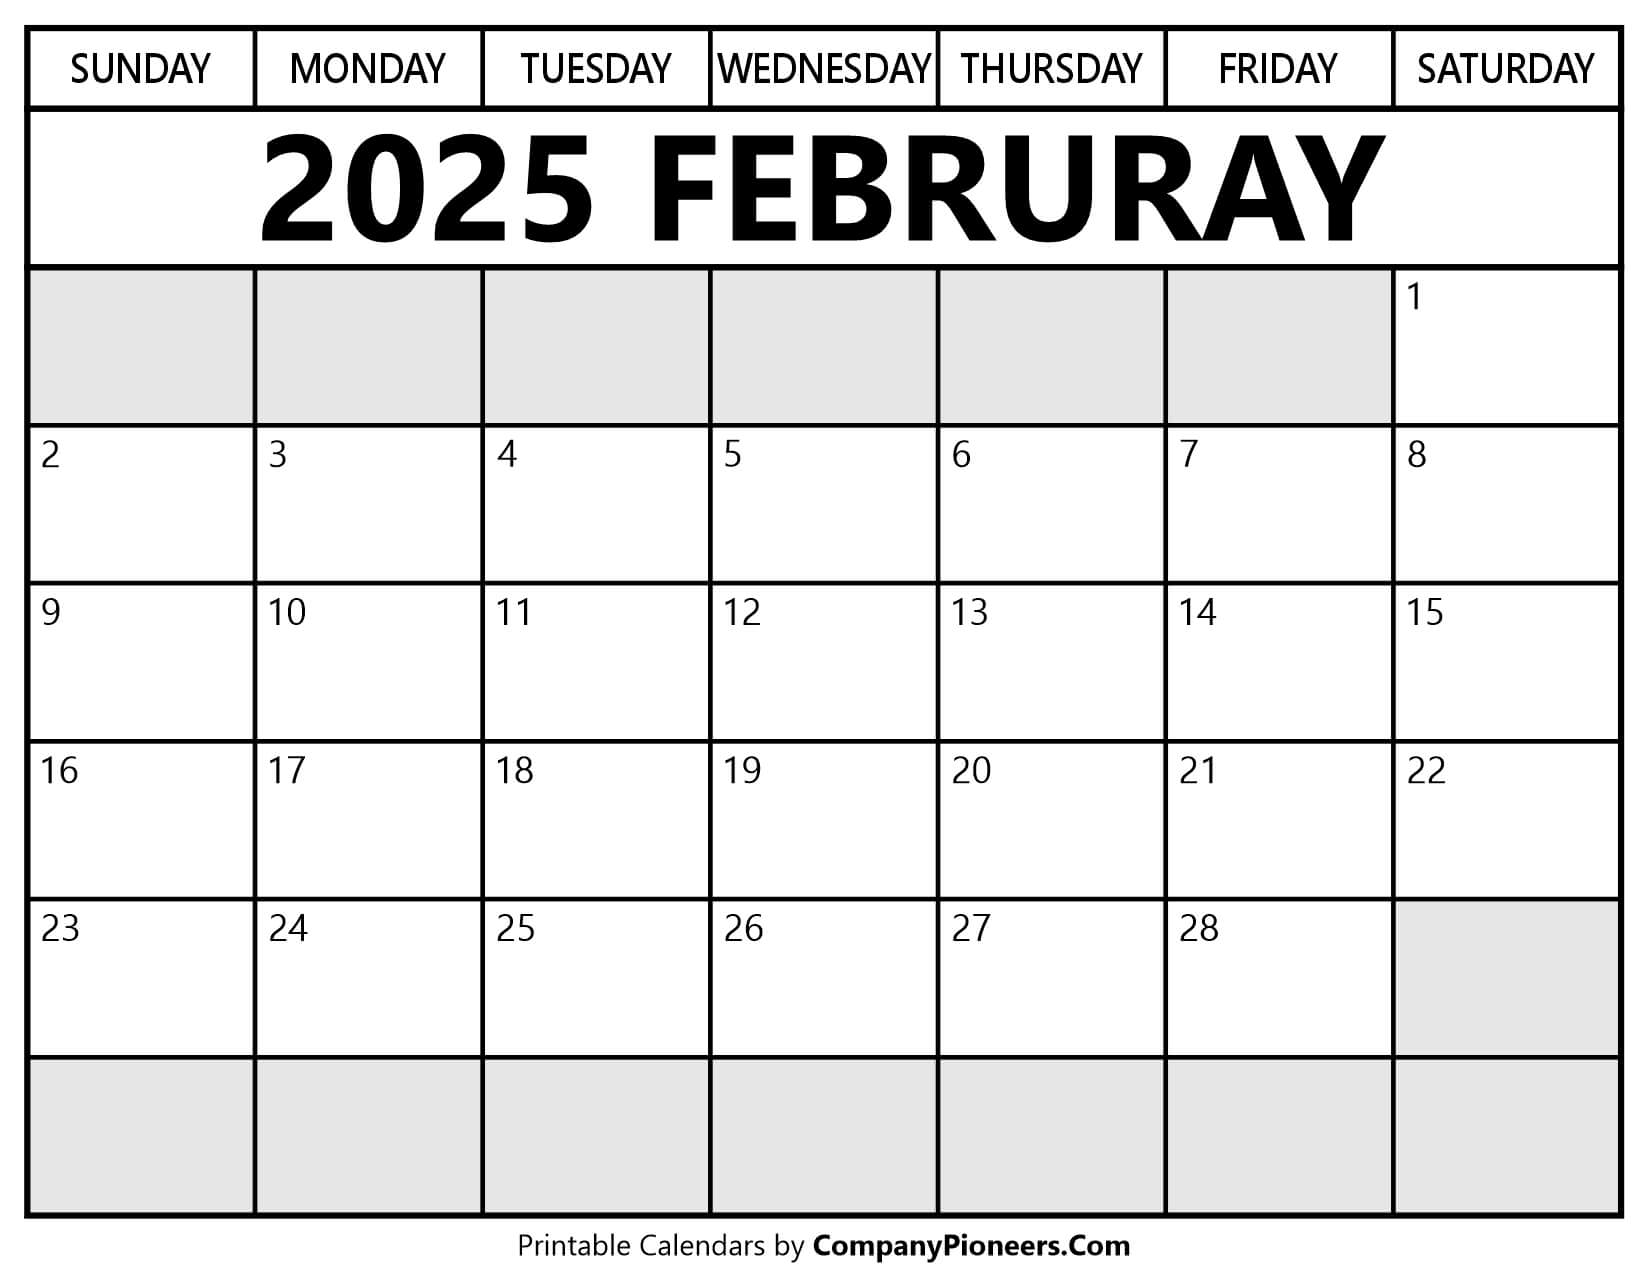 February 2025 Calendar Segoe UI Font